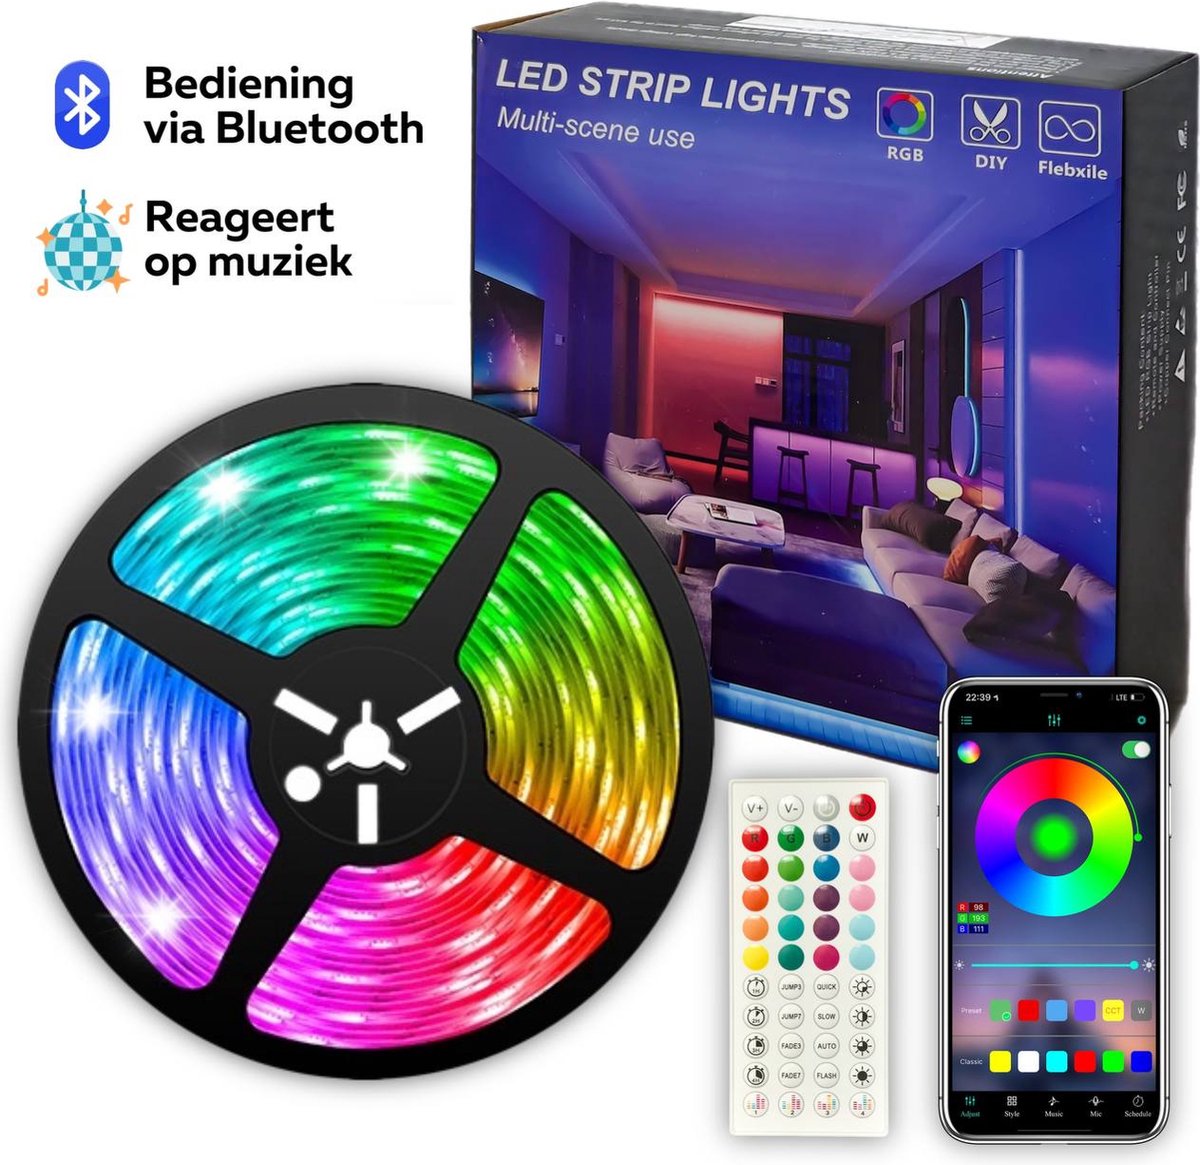 TechHome - Led Strip - 5 Meter - RBG SMD5050 - 16 Miljoen kleuren - Inclusief afstandsbediening - Bediening via App - Bluetooth - Reageert op muziek - Zelfklevend - 30 leds per m - Led light strip - Led lights - Led strips